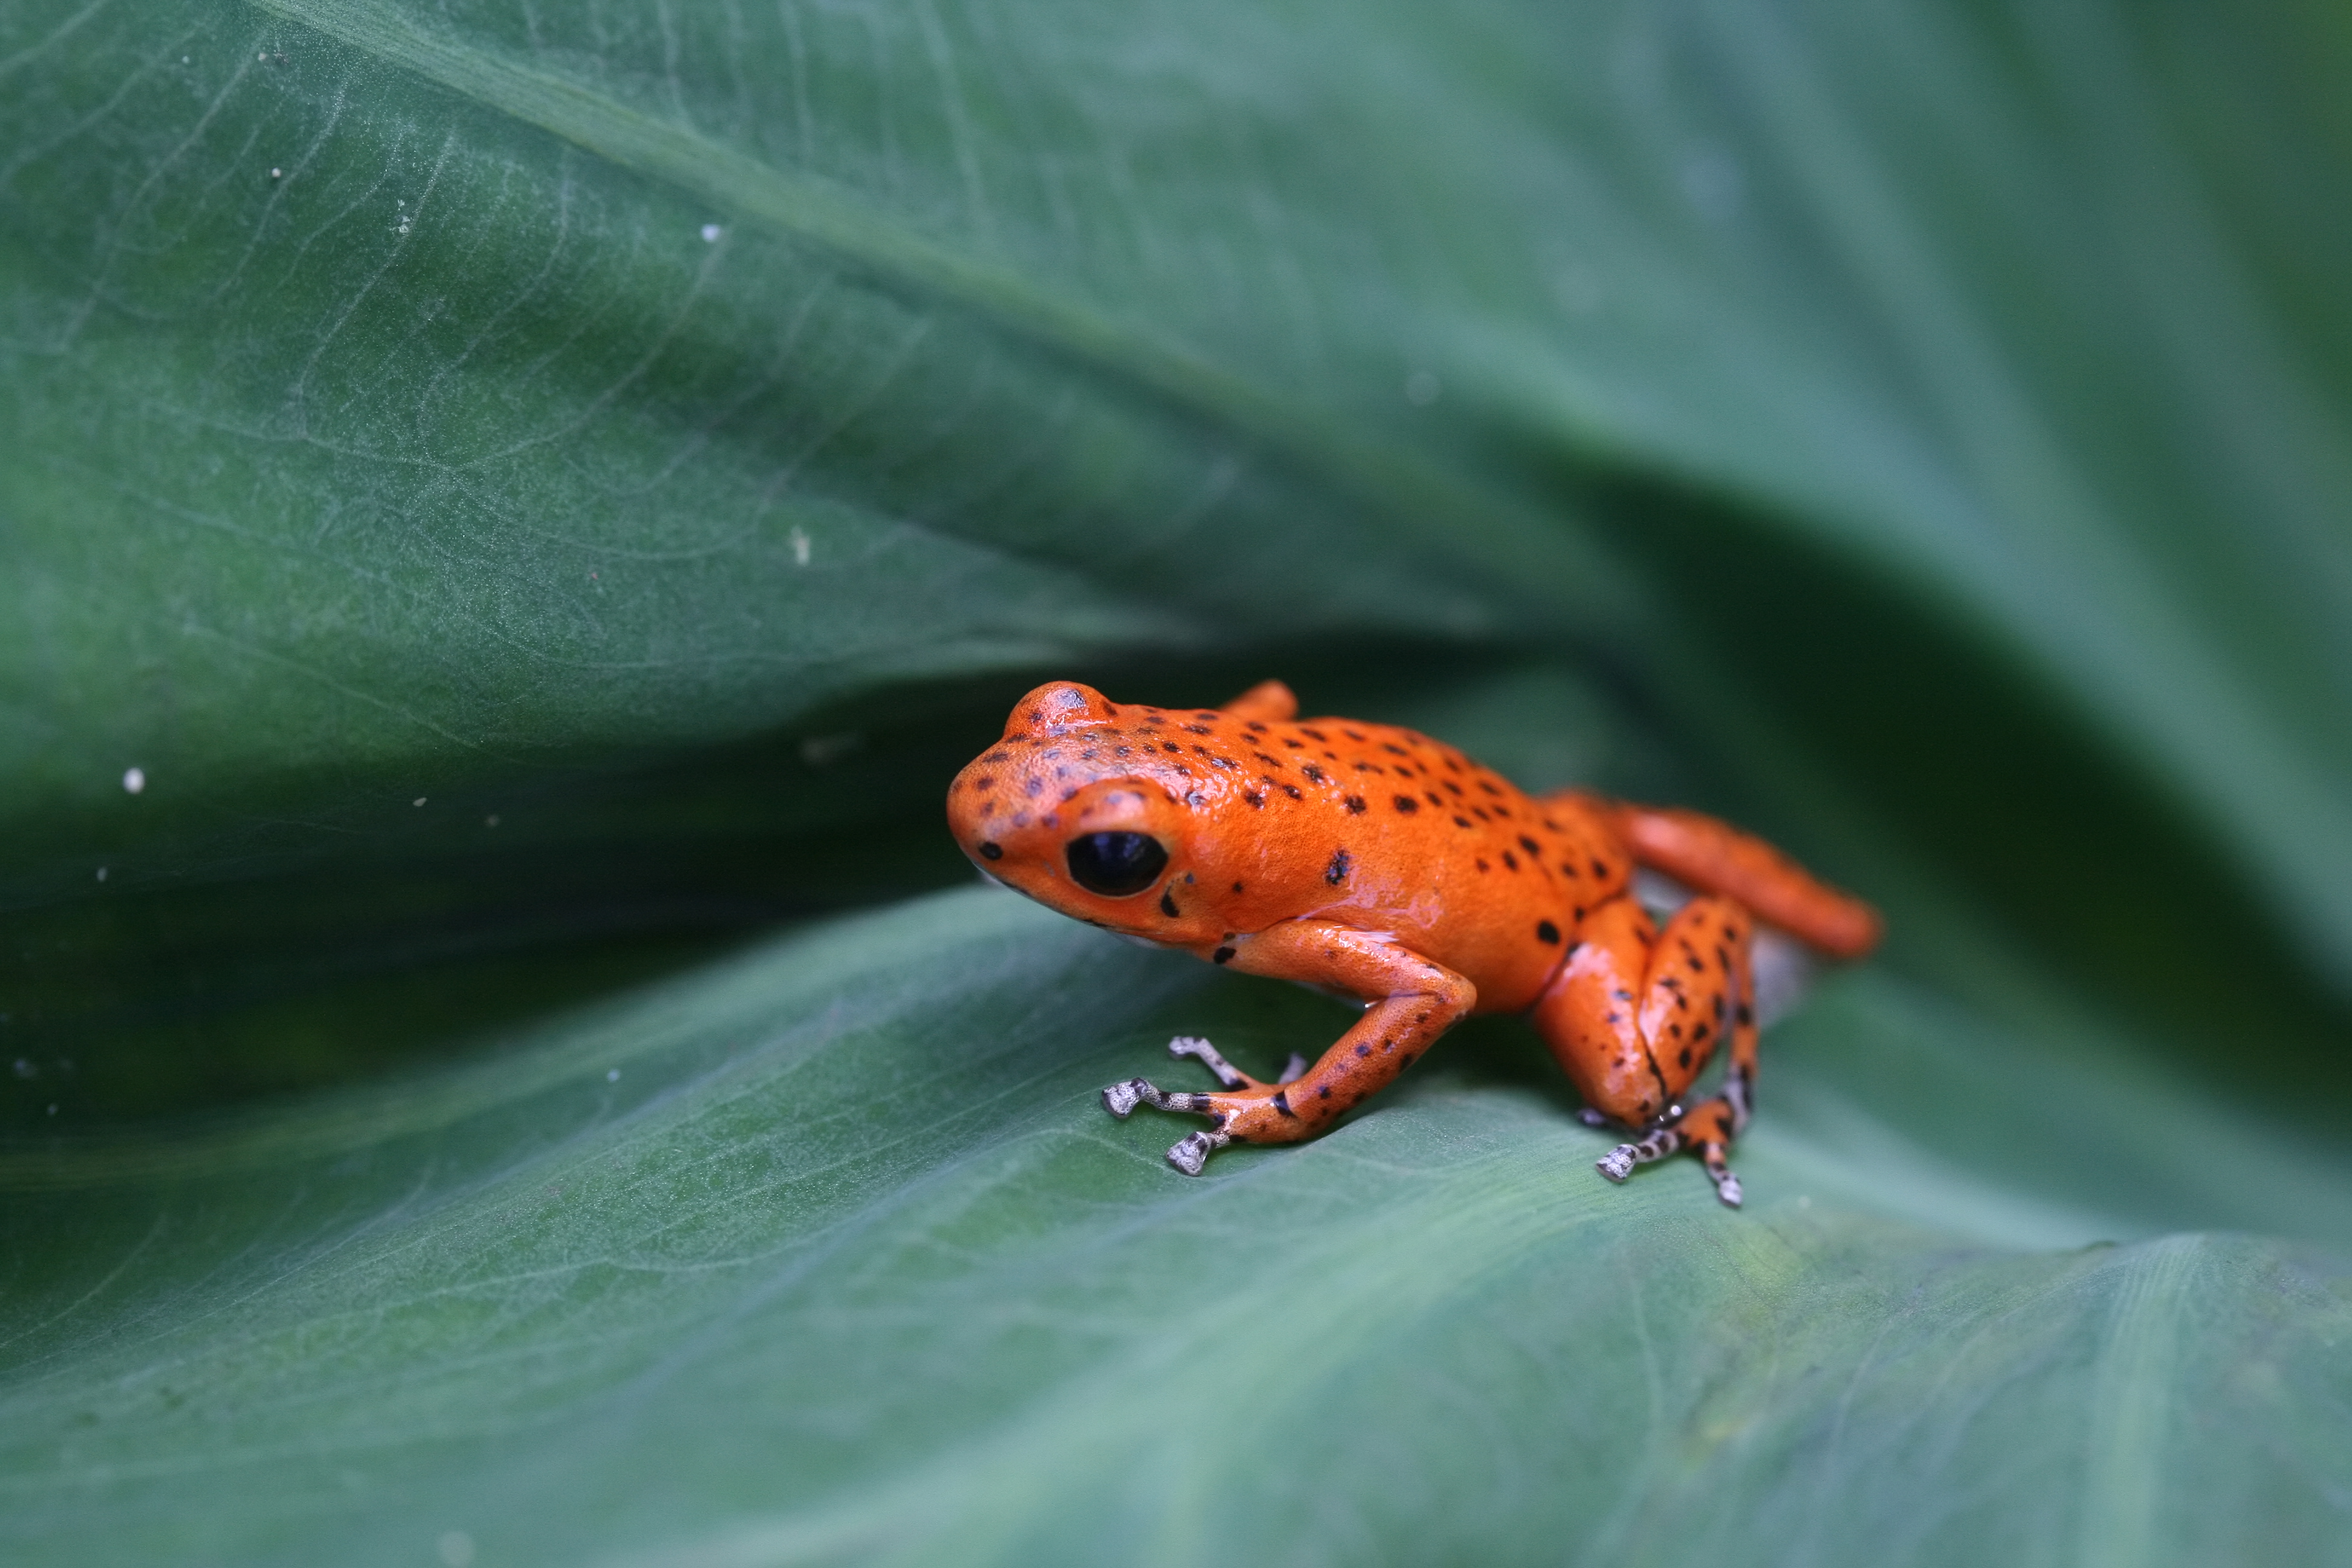 File:Red poison dart frog.jpg - Wikimedia Commons